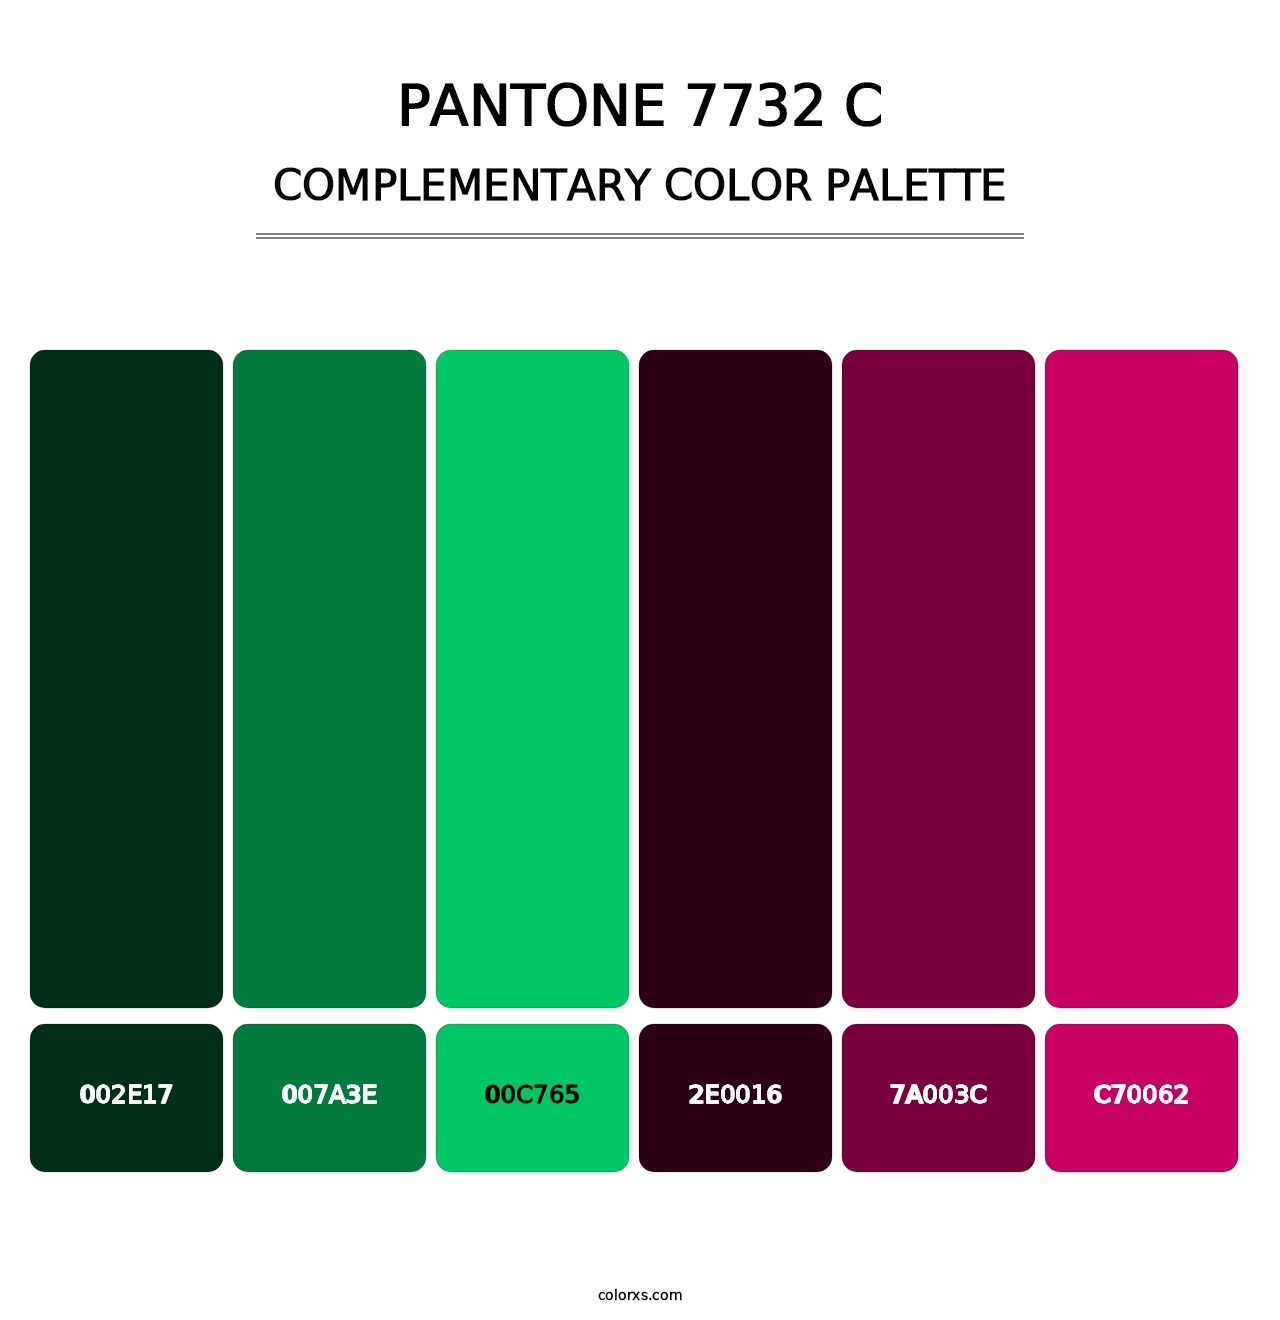 PANTONE 7732 C - Complementary Color Palette